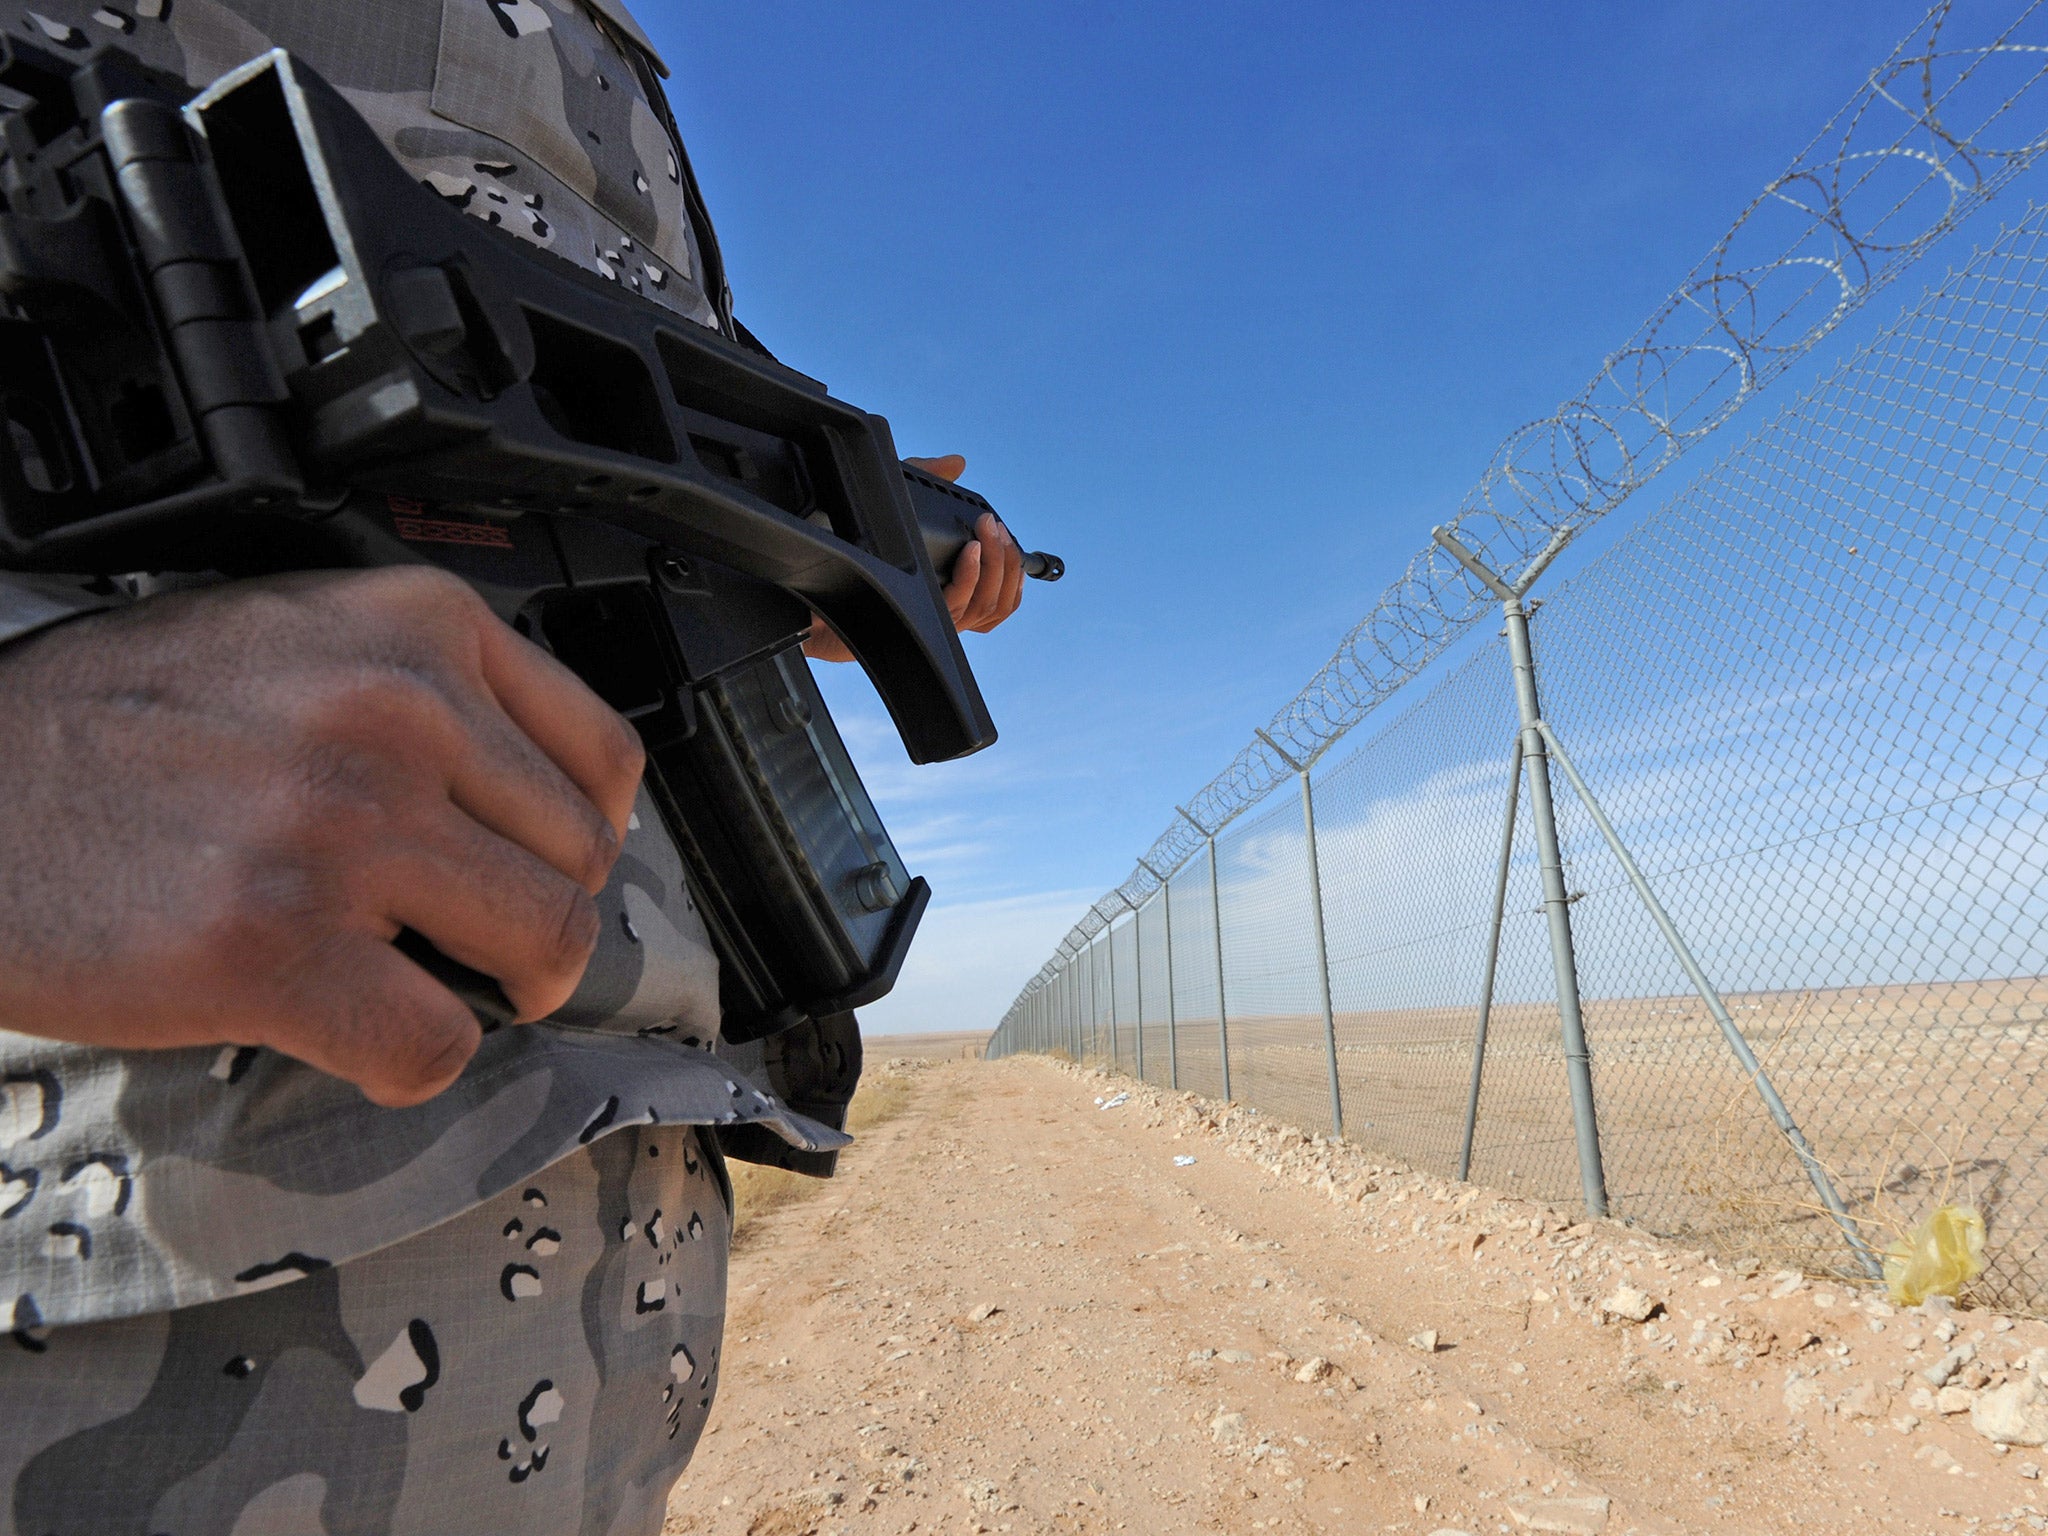 A Saudi border guard officer on patrol. File photo